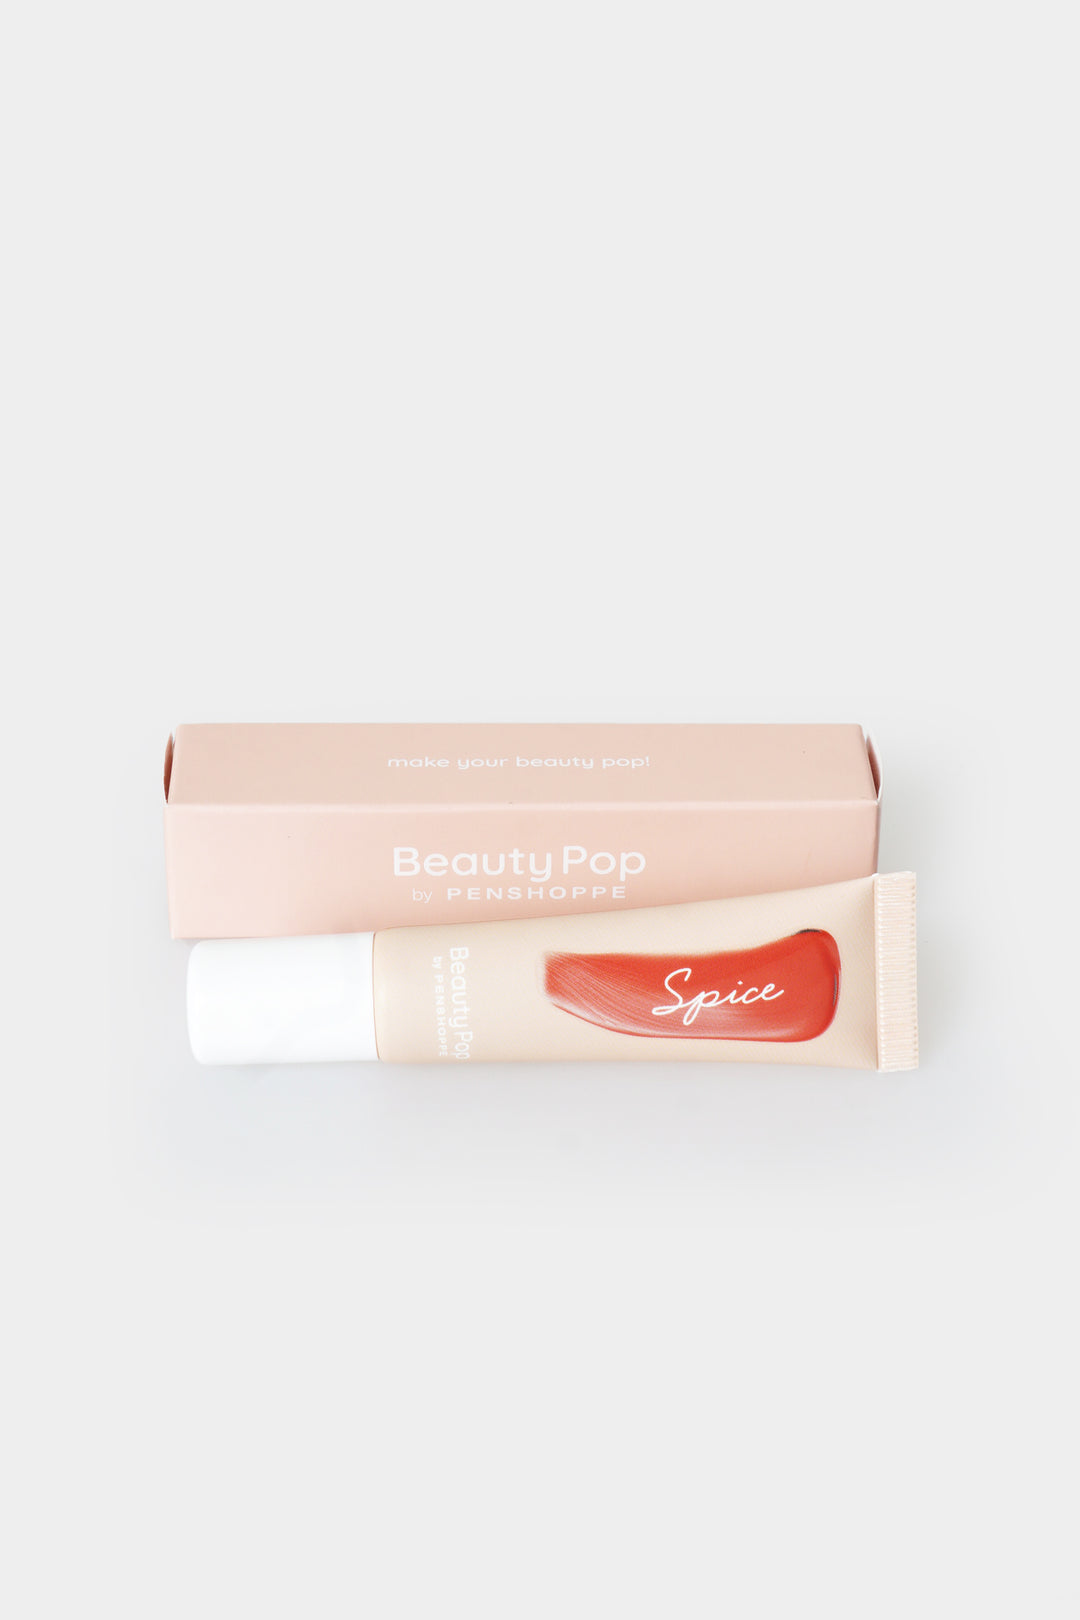 Penshoppe Beauty Pop Cream Blush In Spice